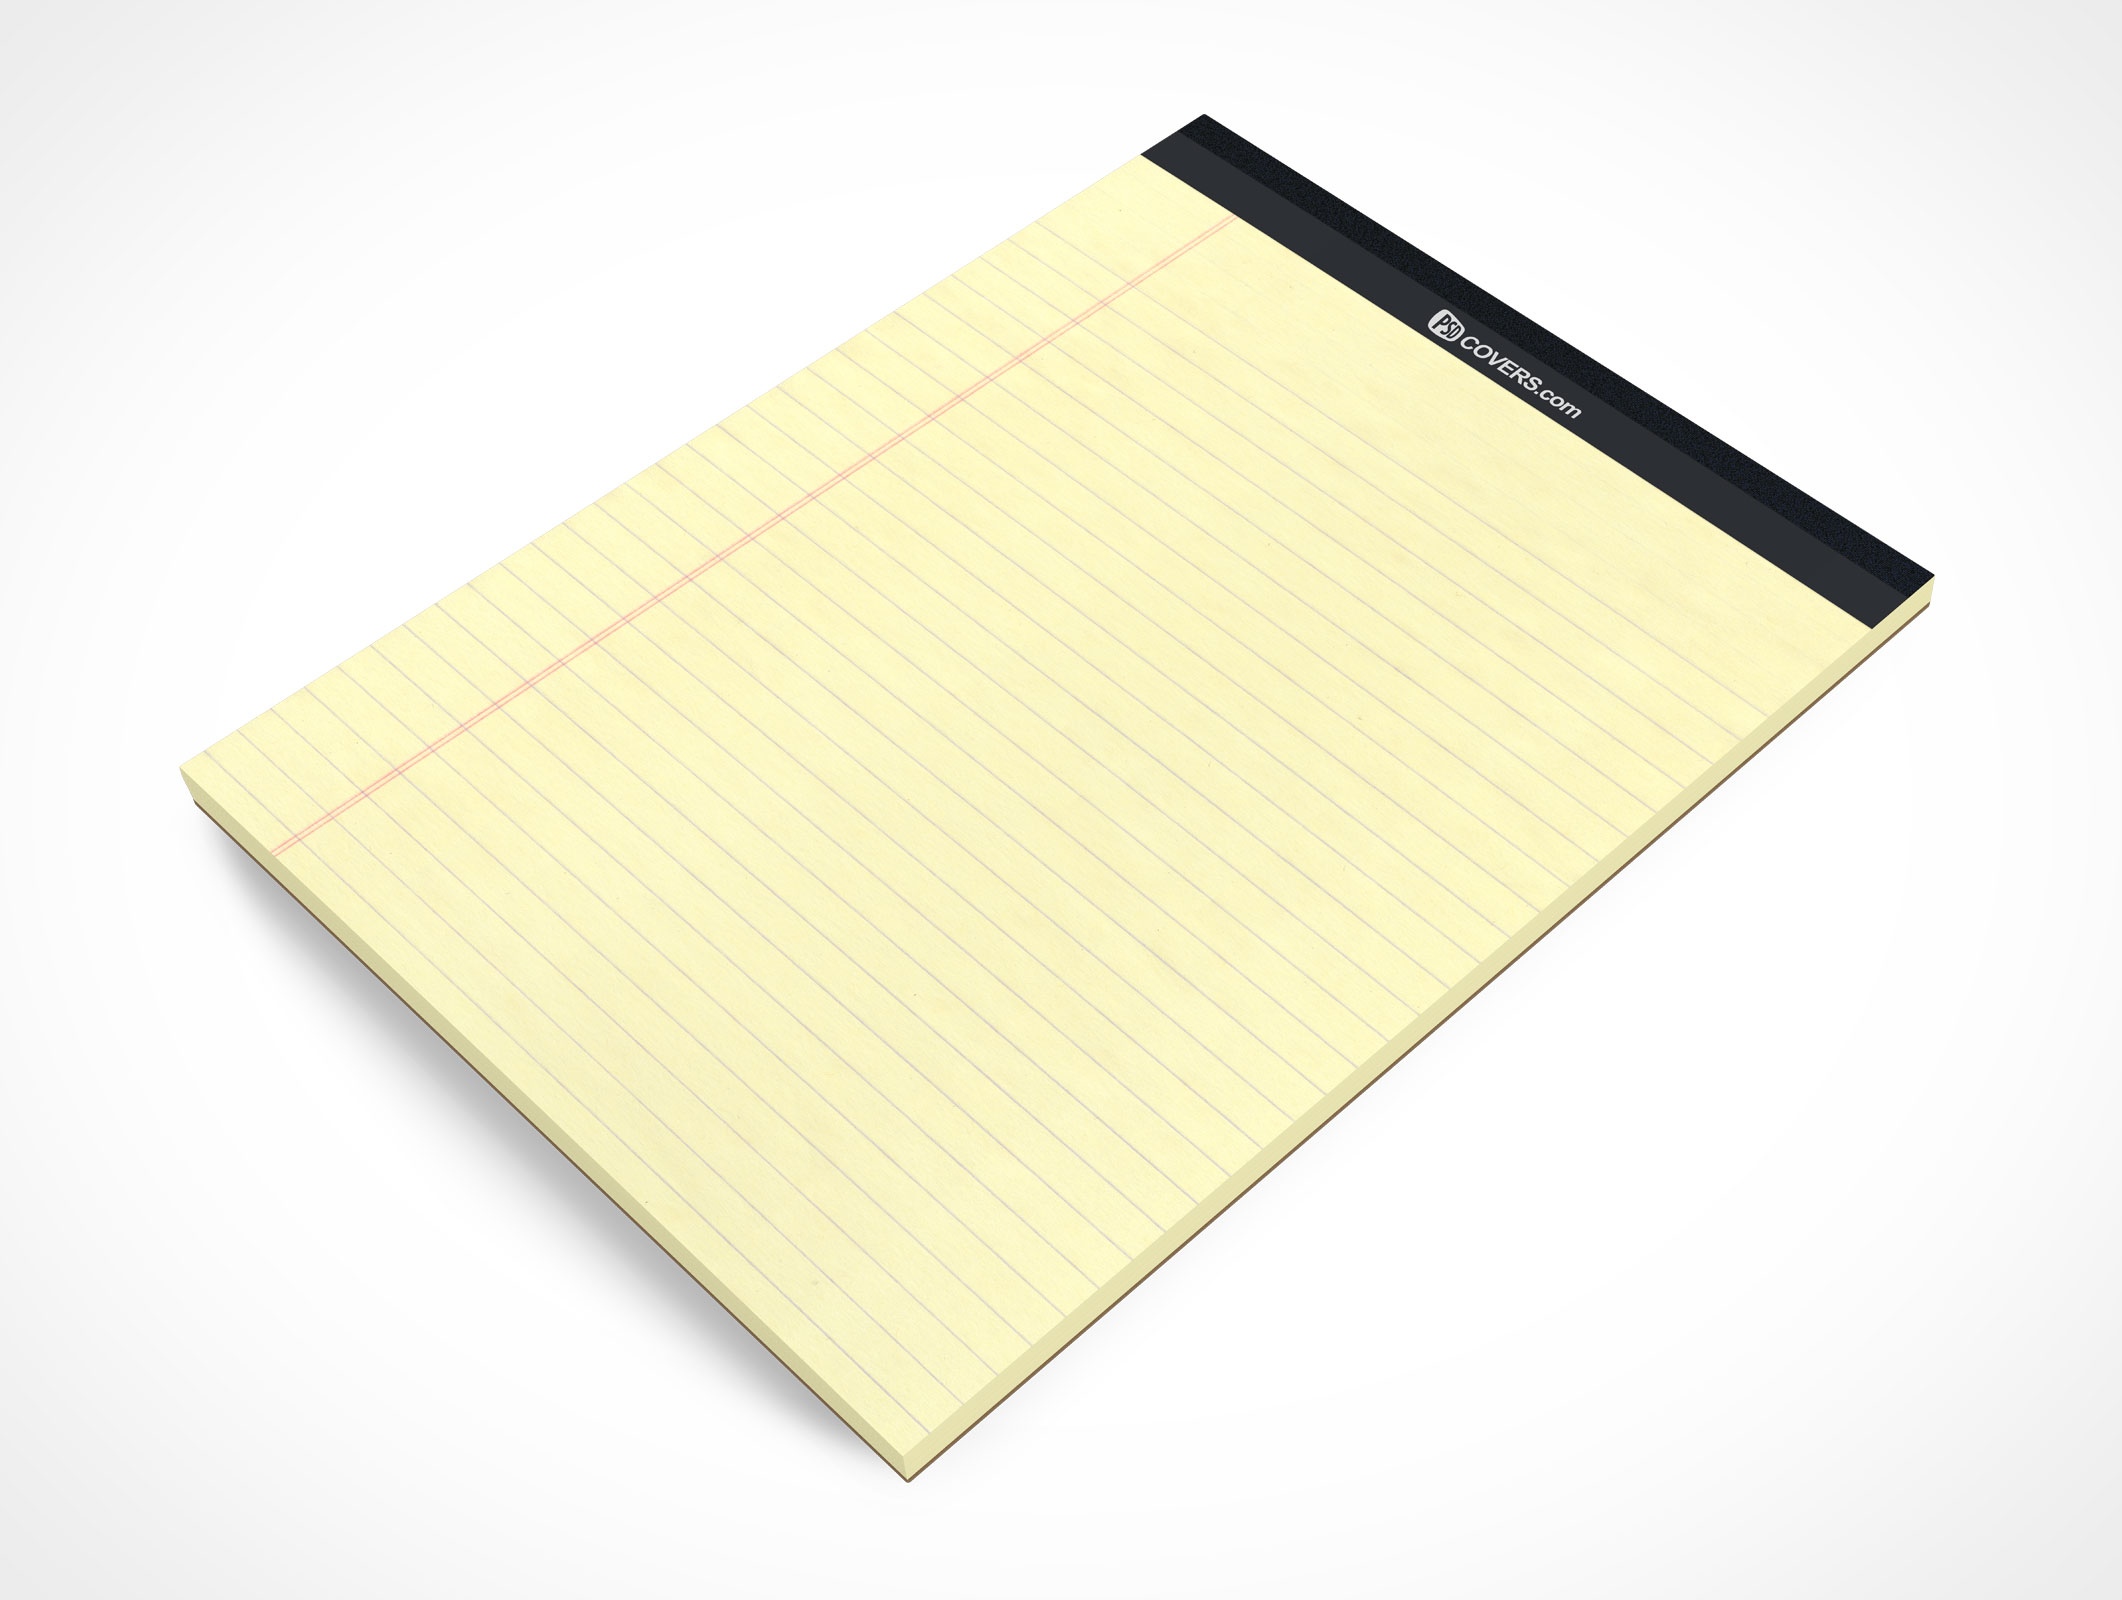 Stationery Notepad Mockup 3r2